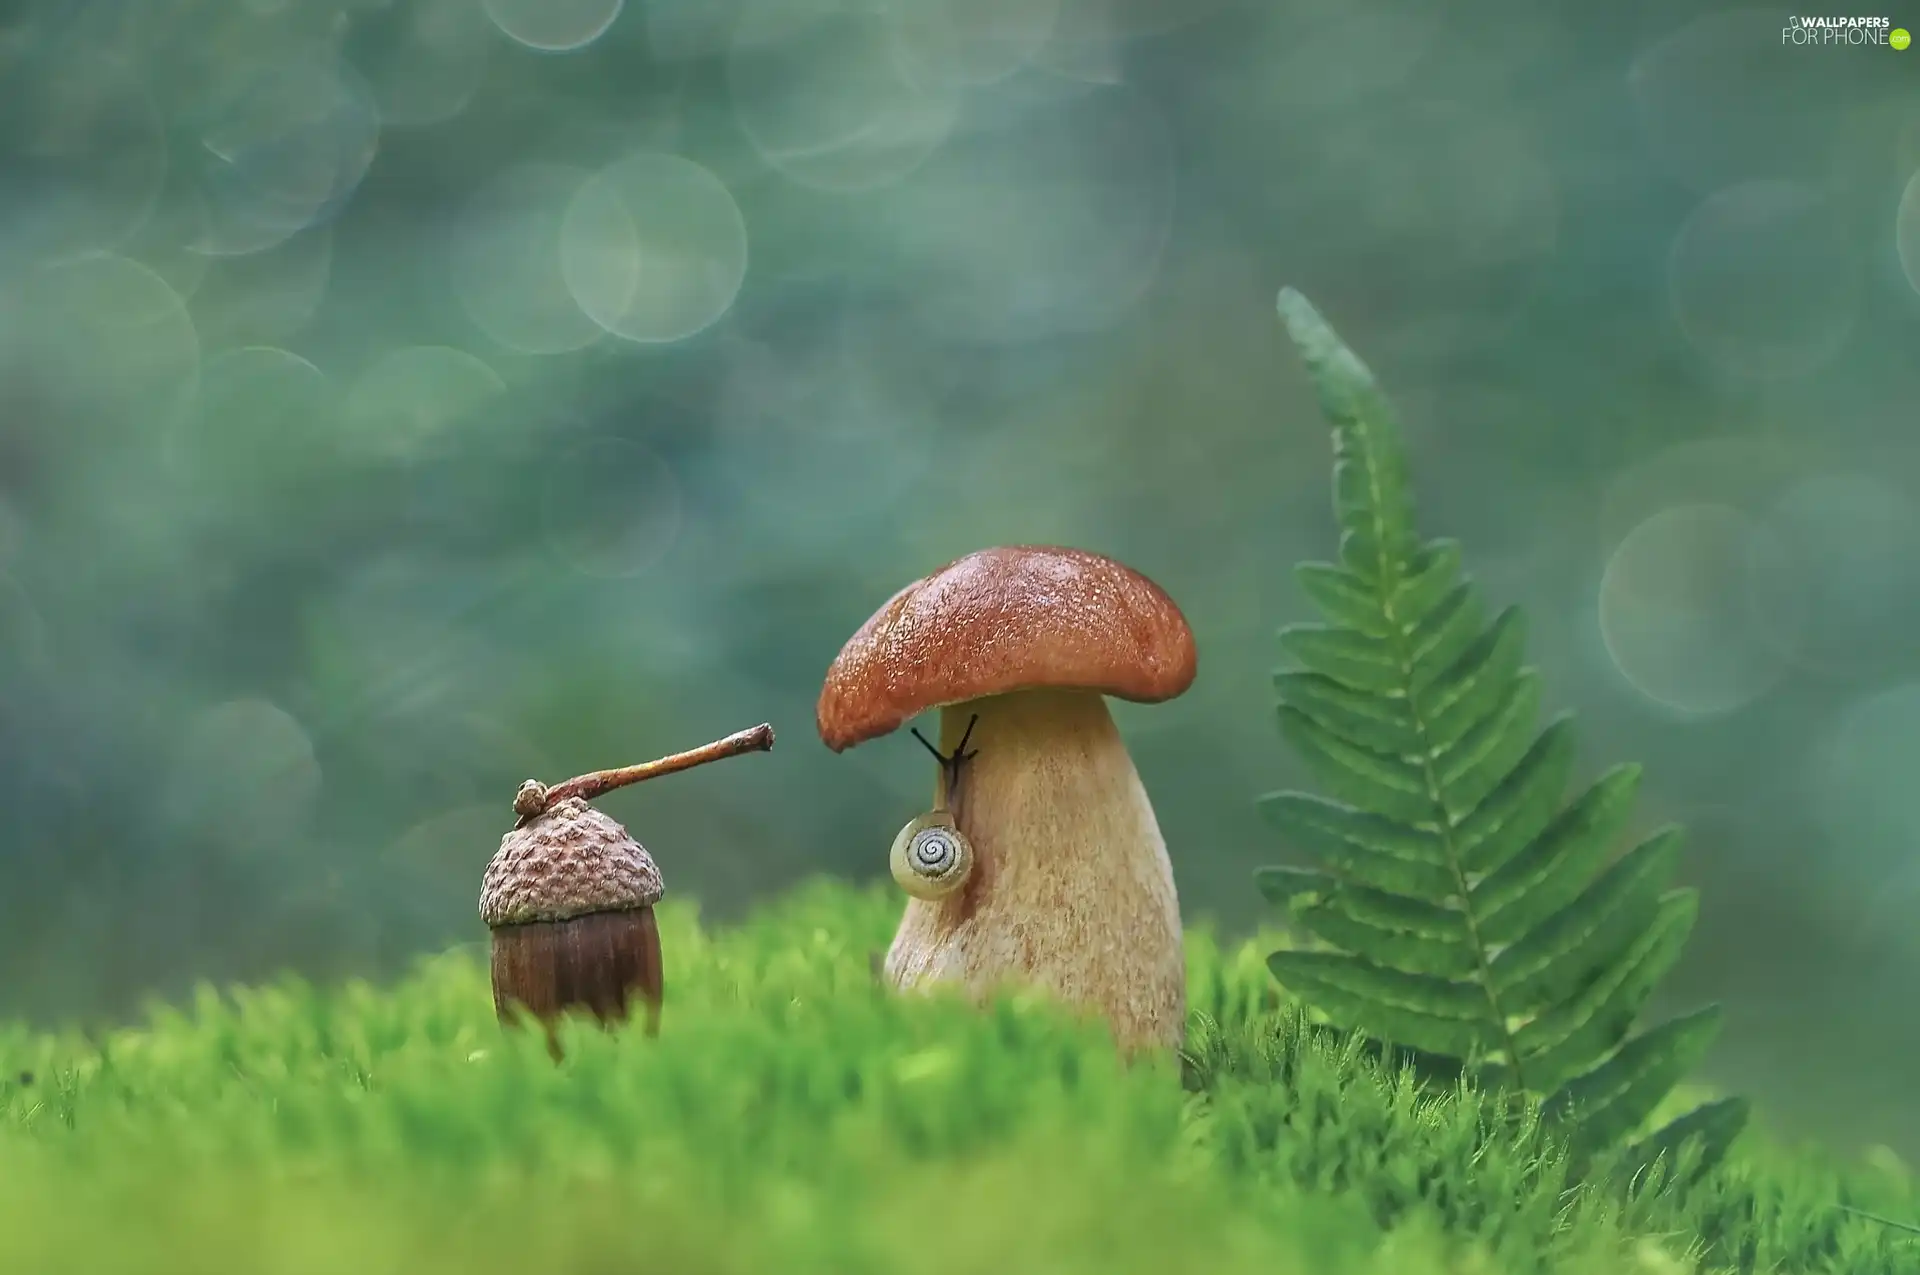 grass, Real mushroom, leaf, snail, Mushrooms, acorn, fern